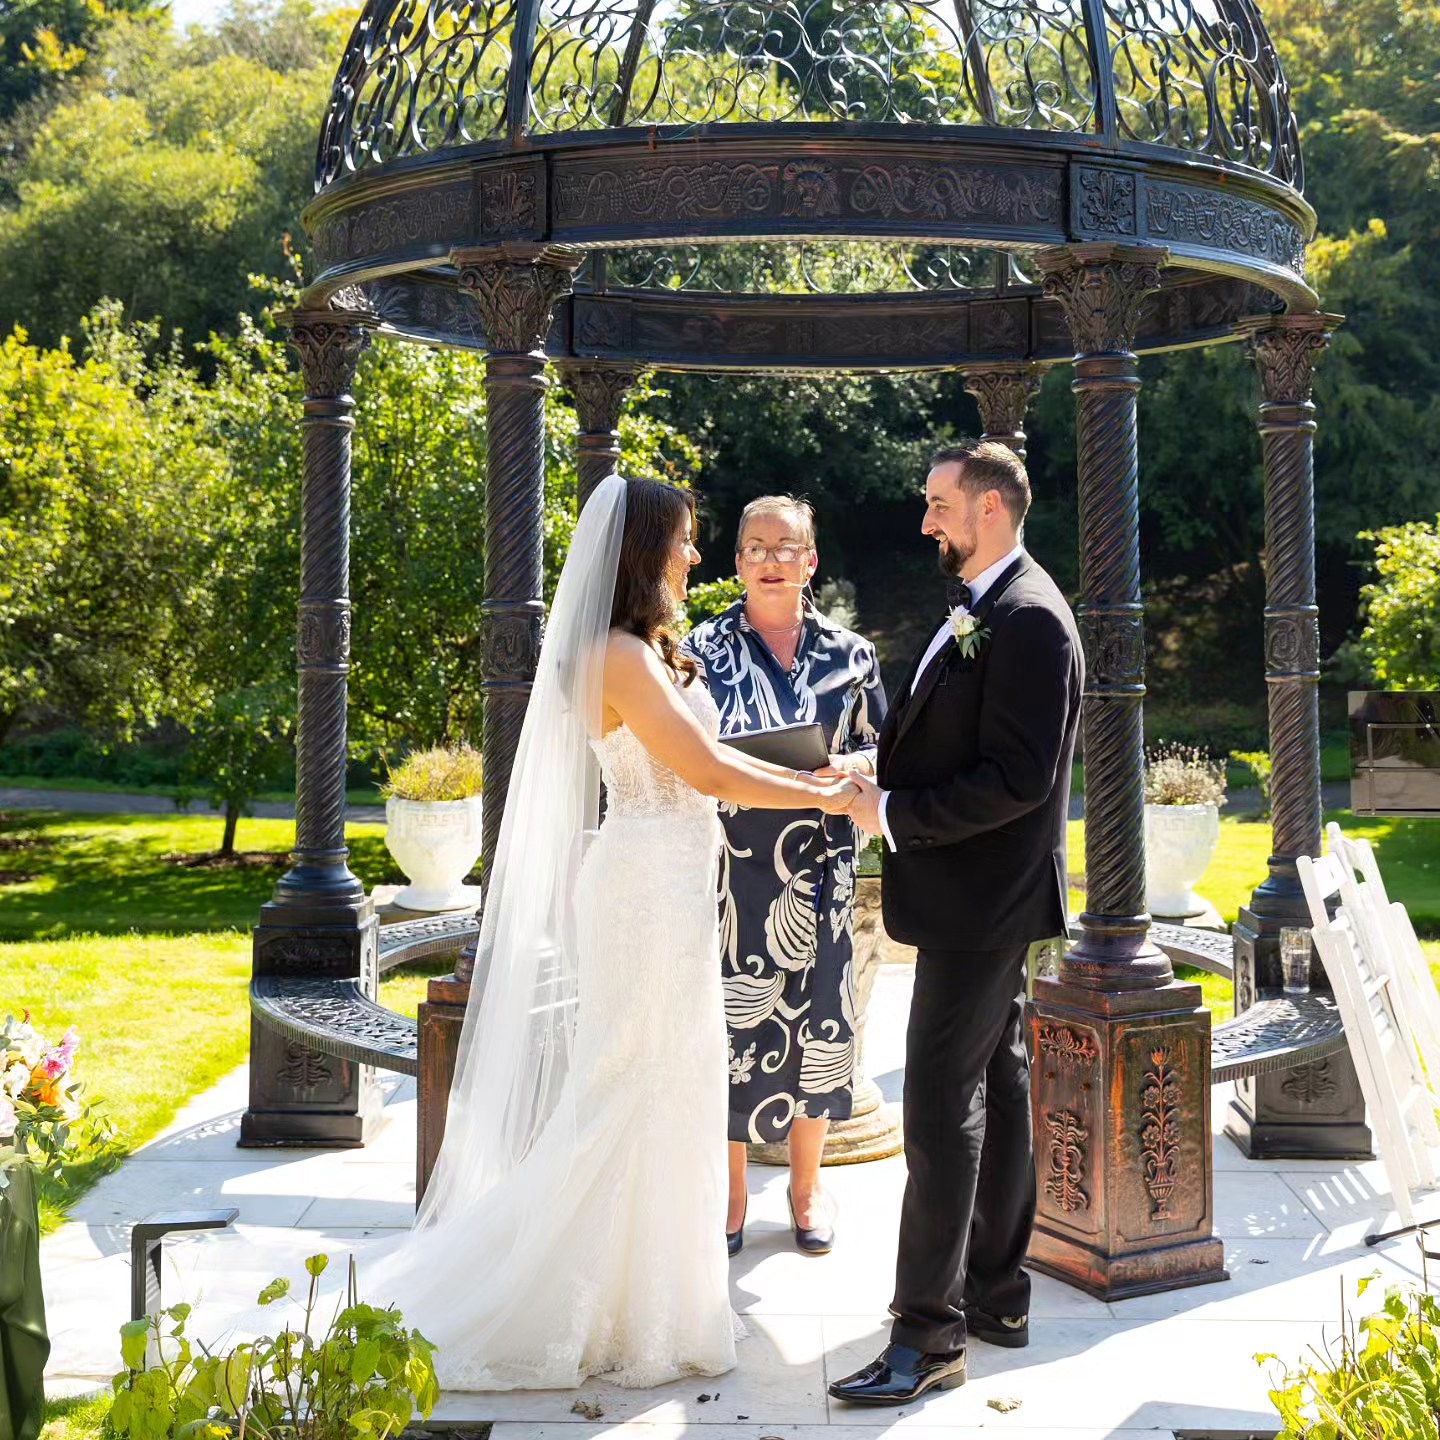 Heartfelt Wedding Ceremonies Unique To You & Your Partner